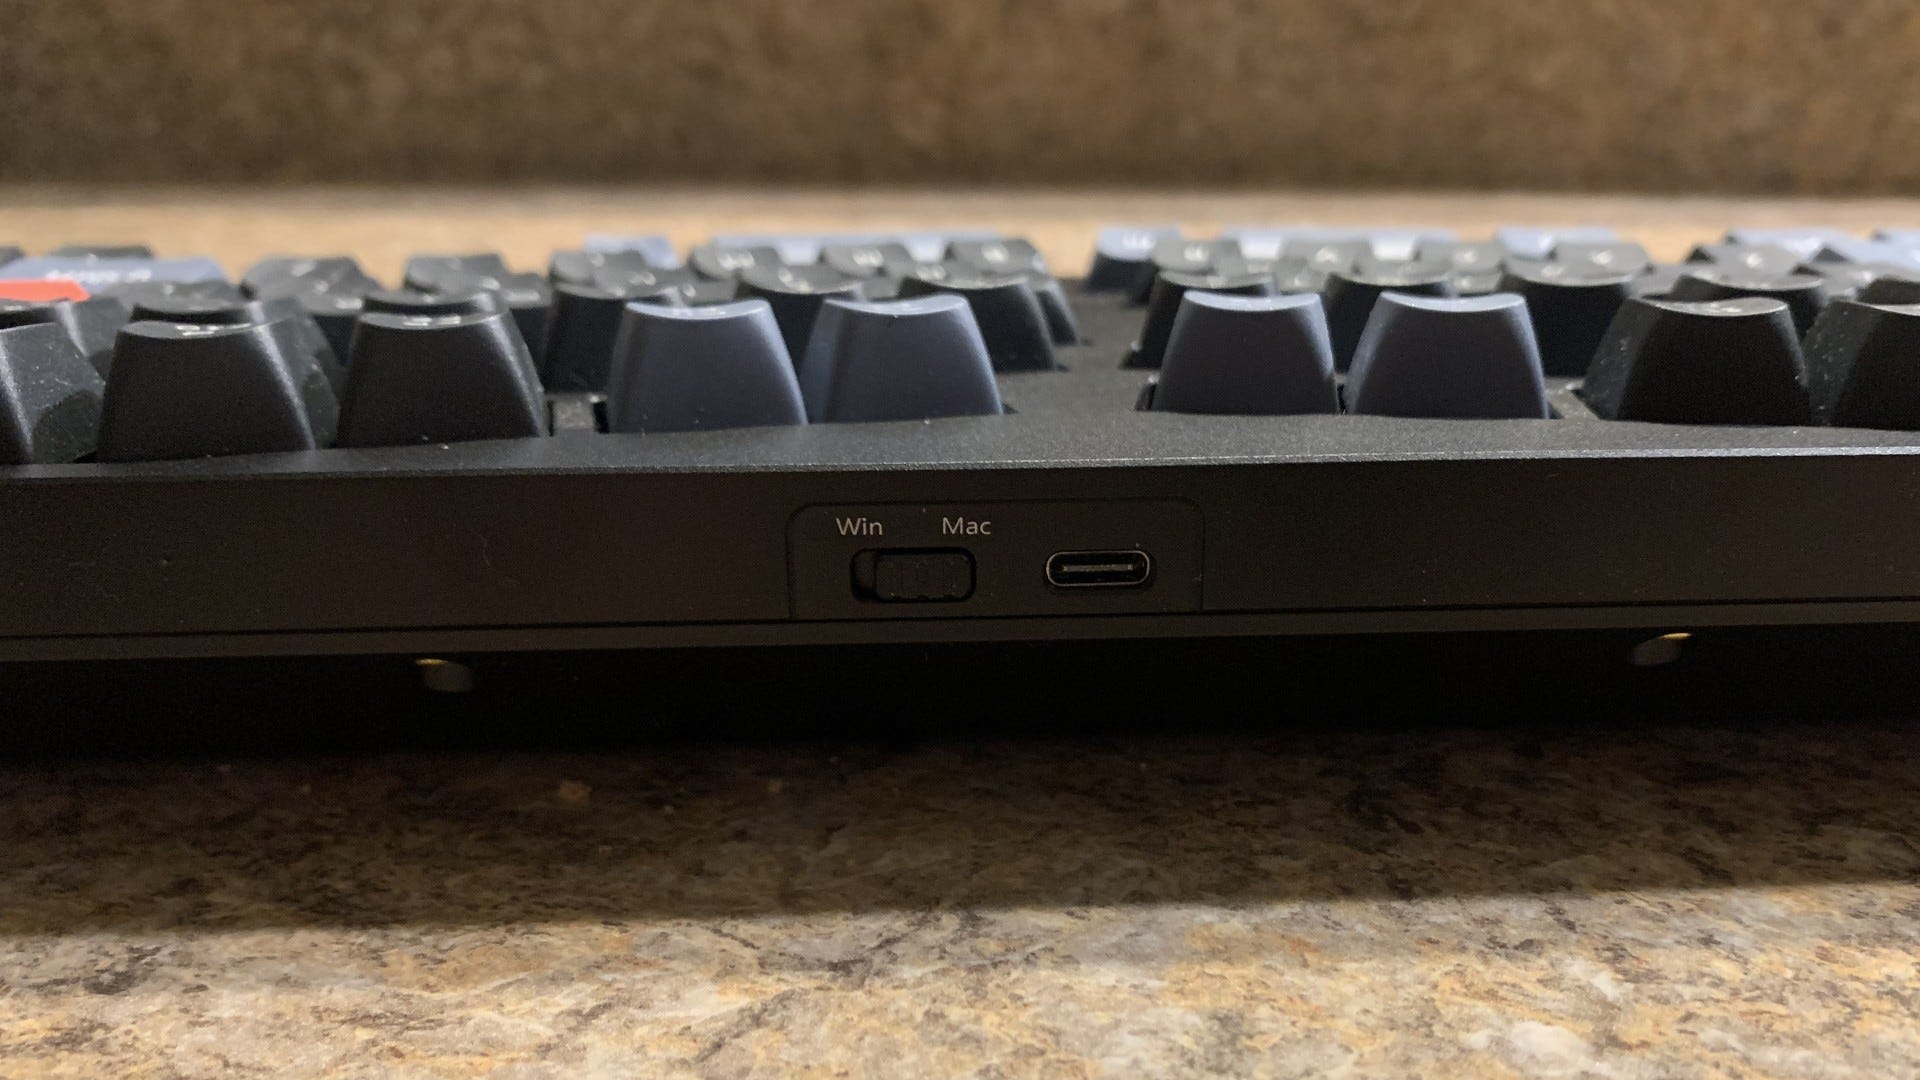 Keychron Q10 keyboard's USB port and Windows/Mac switch